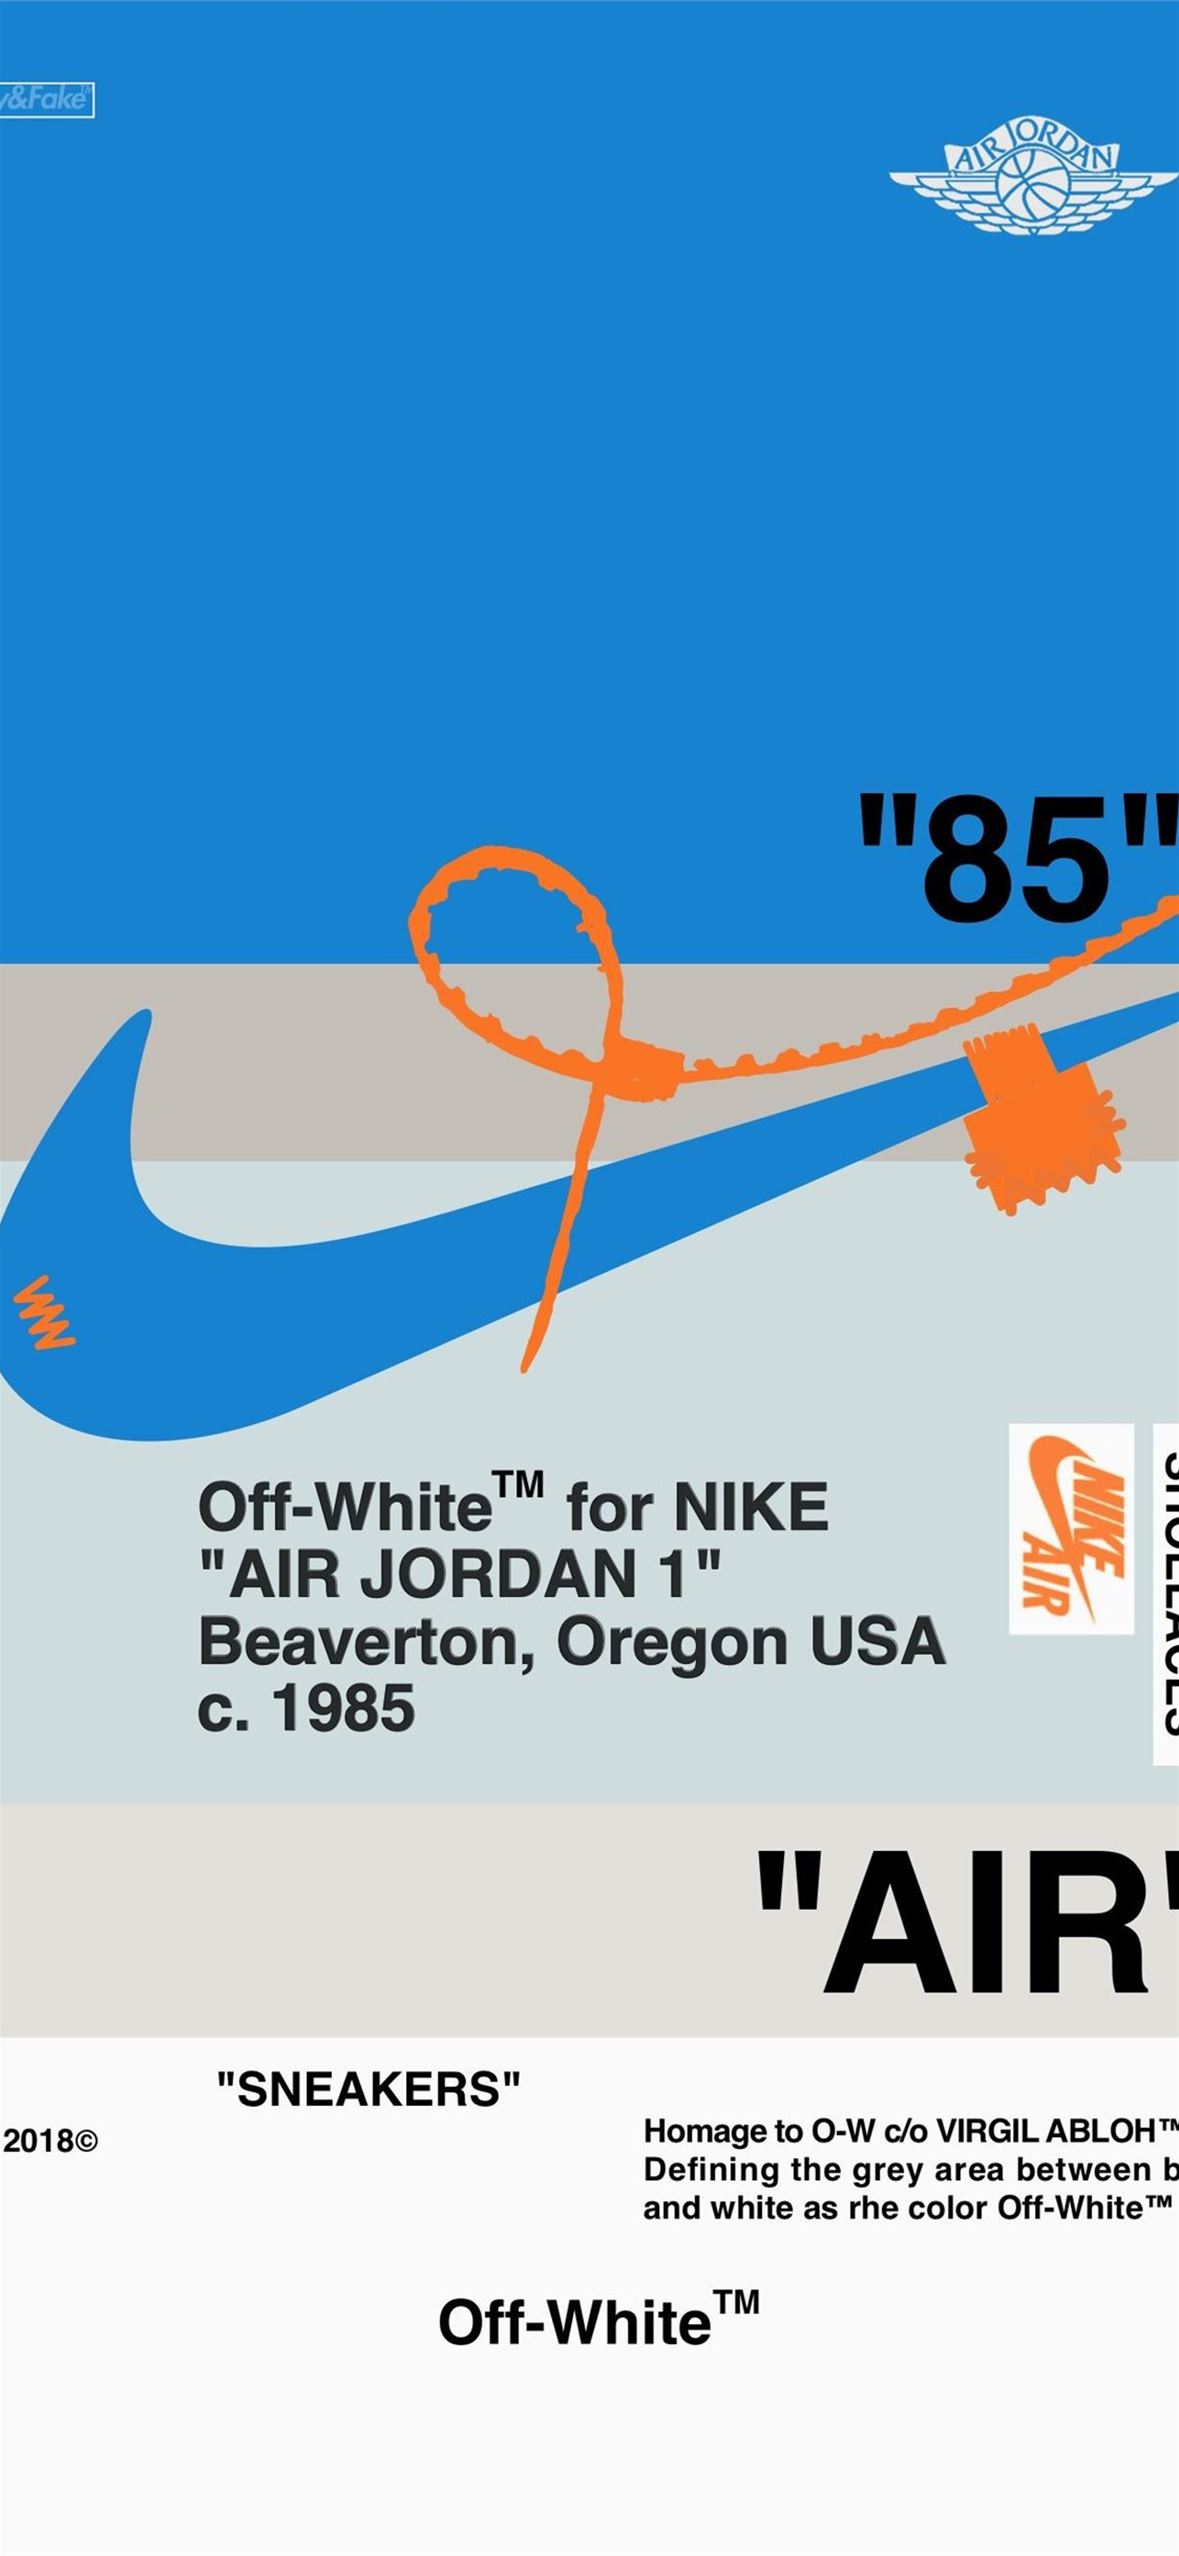 Nike Jordan iPhone Wallpapers  Top Free Nike Jordan iPhone Backgrounds   WallpaperAccess